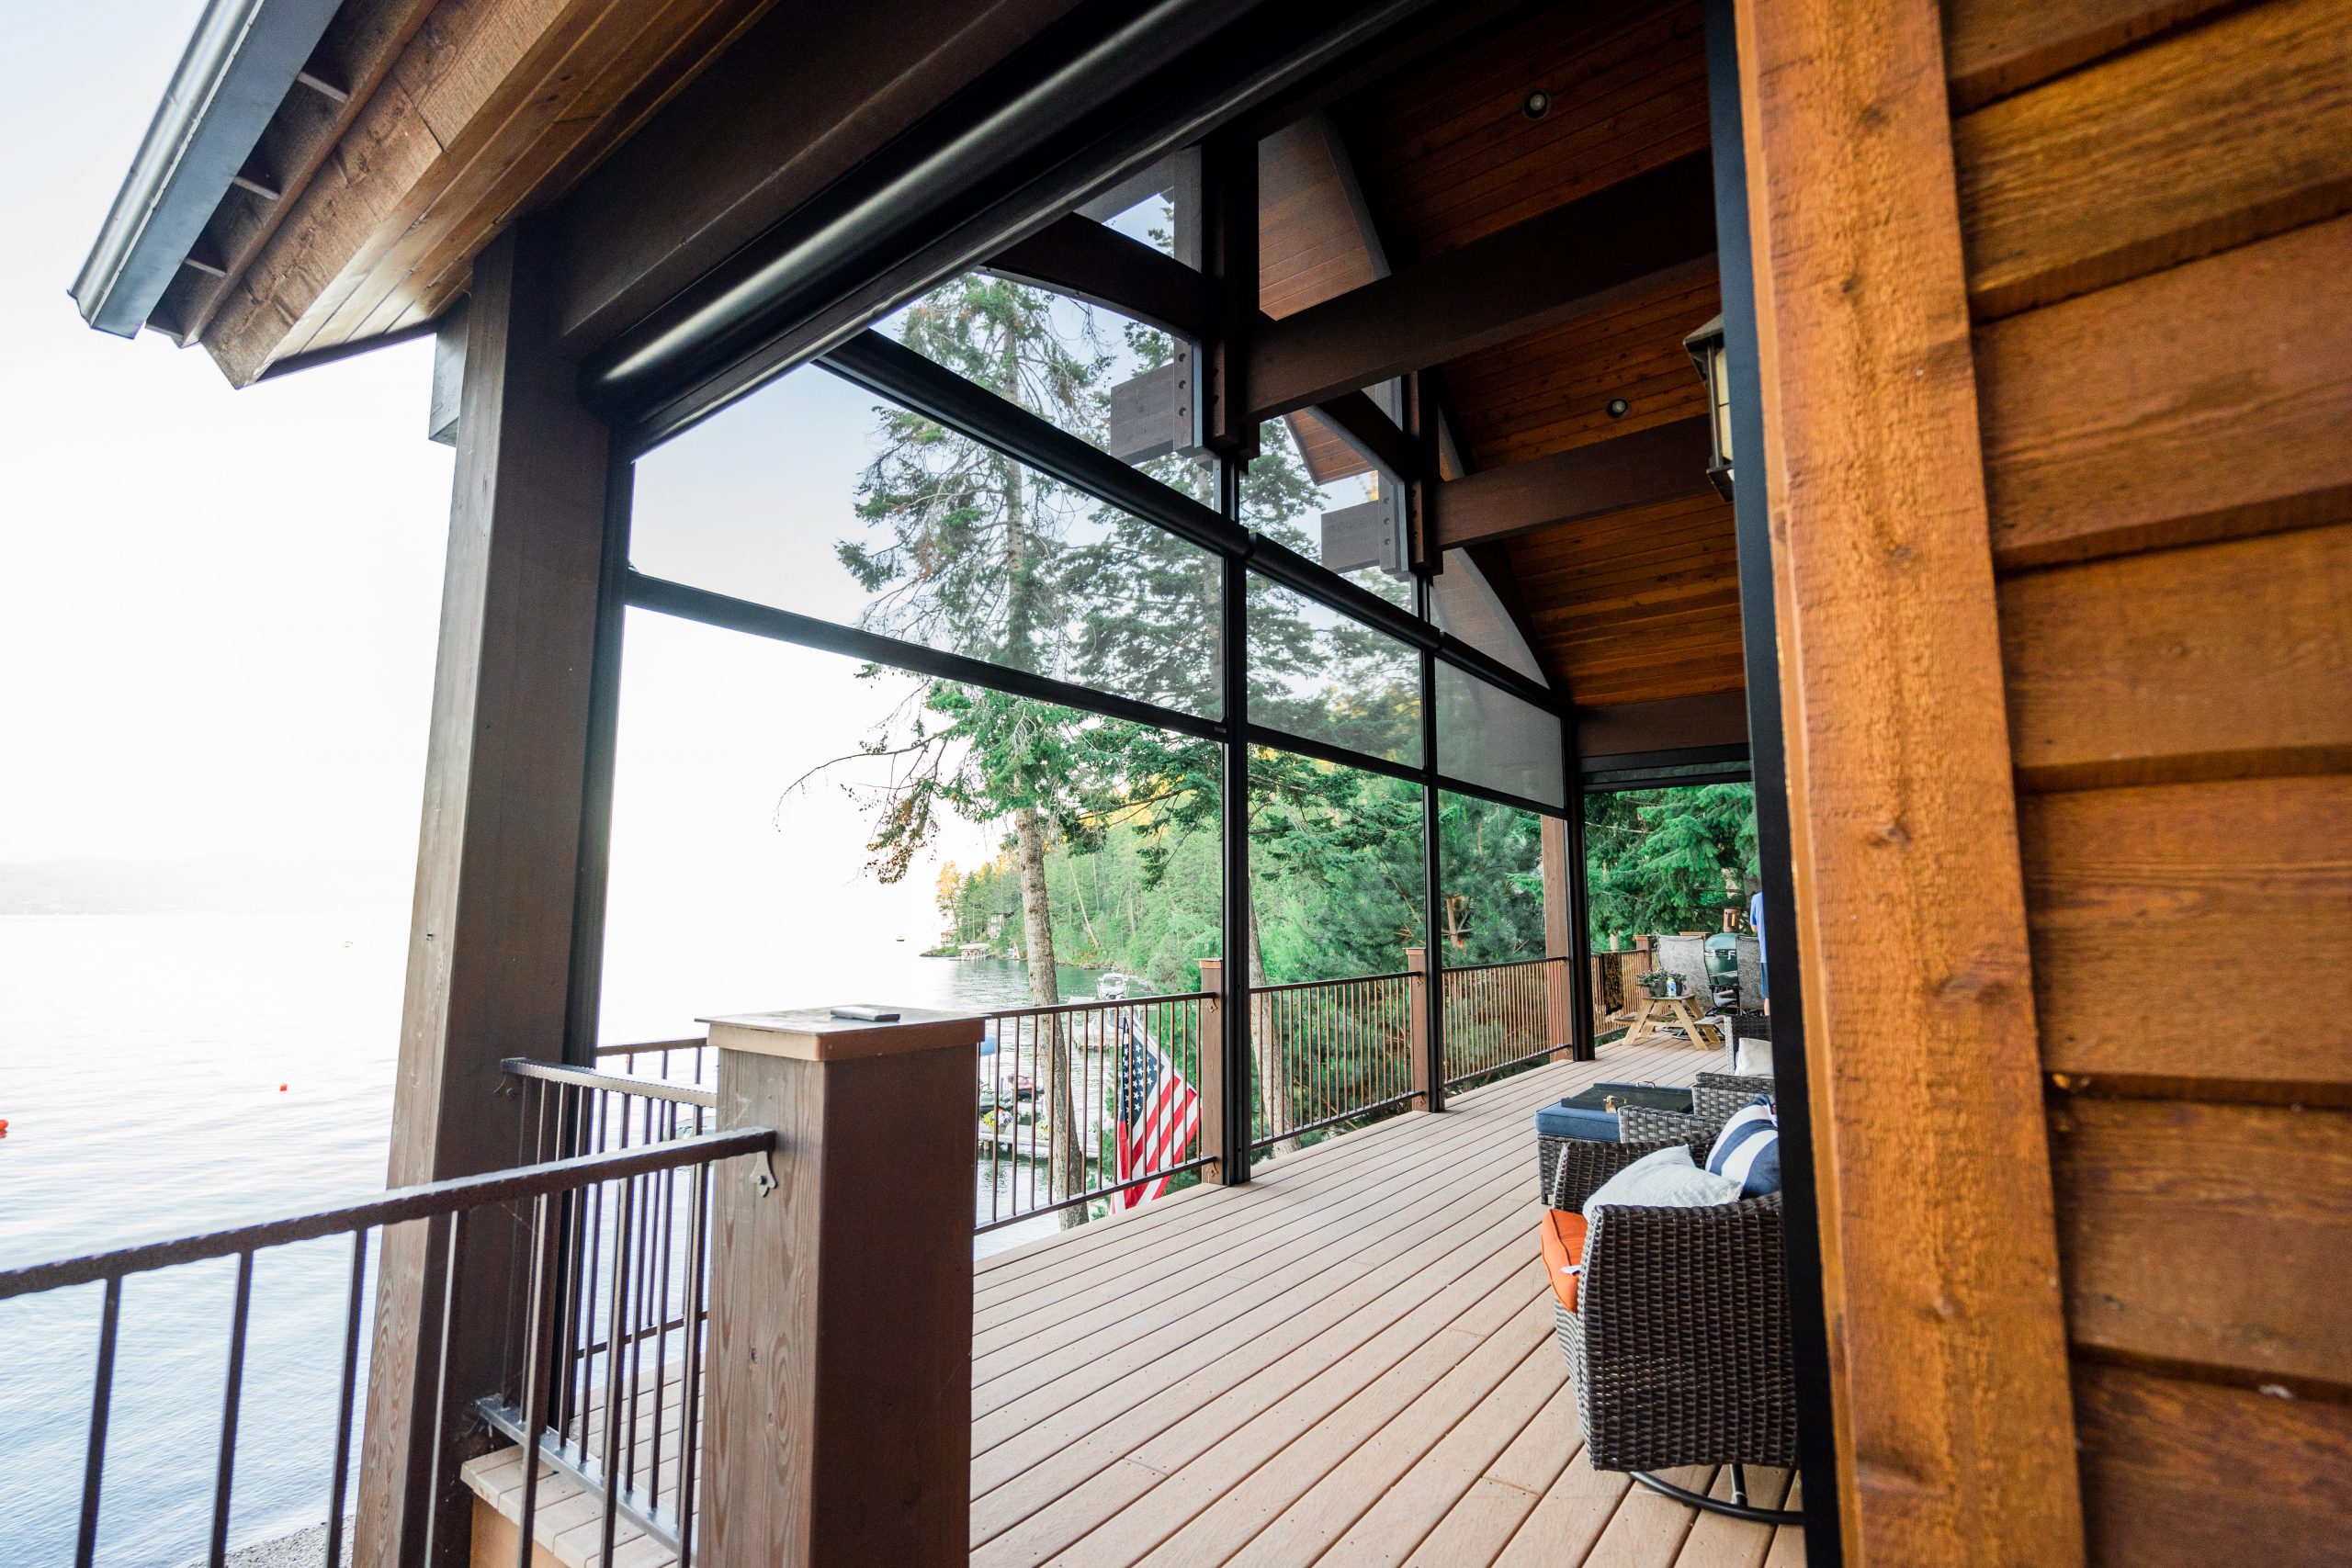 Retractable Screen for Cabin Deck - Better Outdoor Living